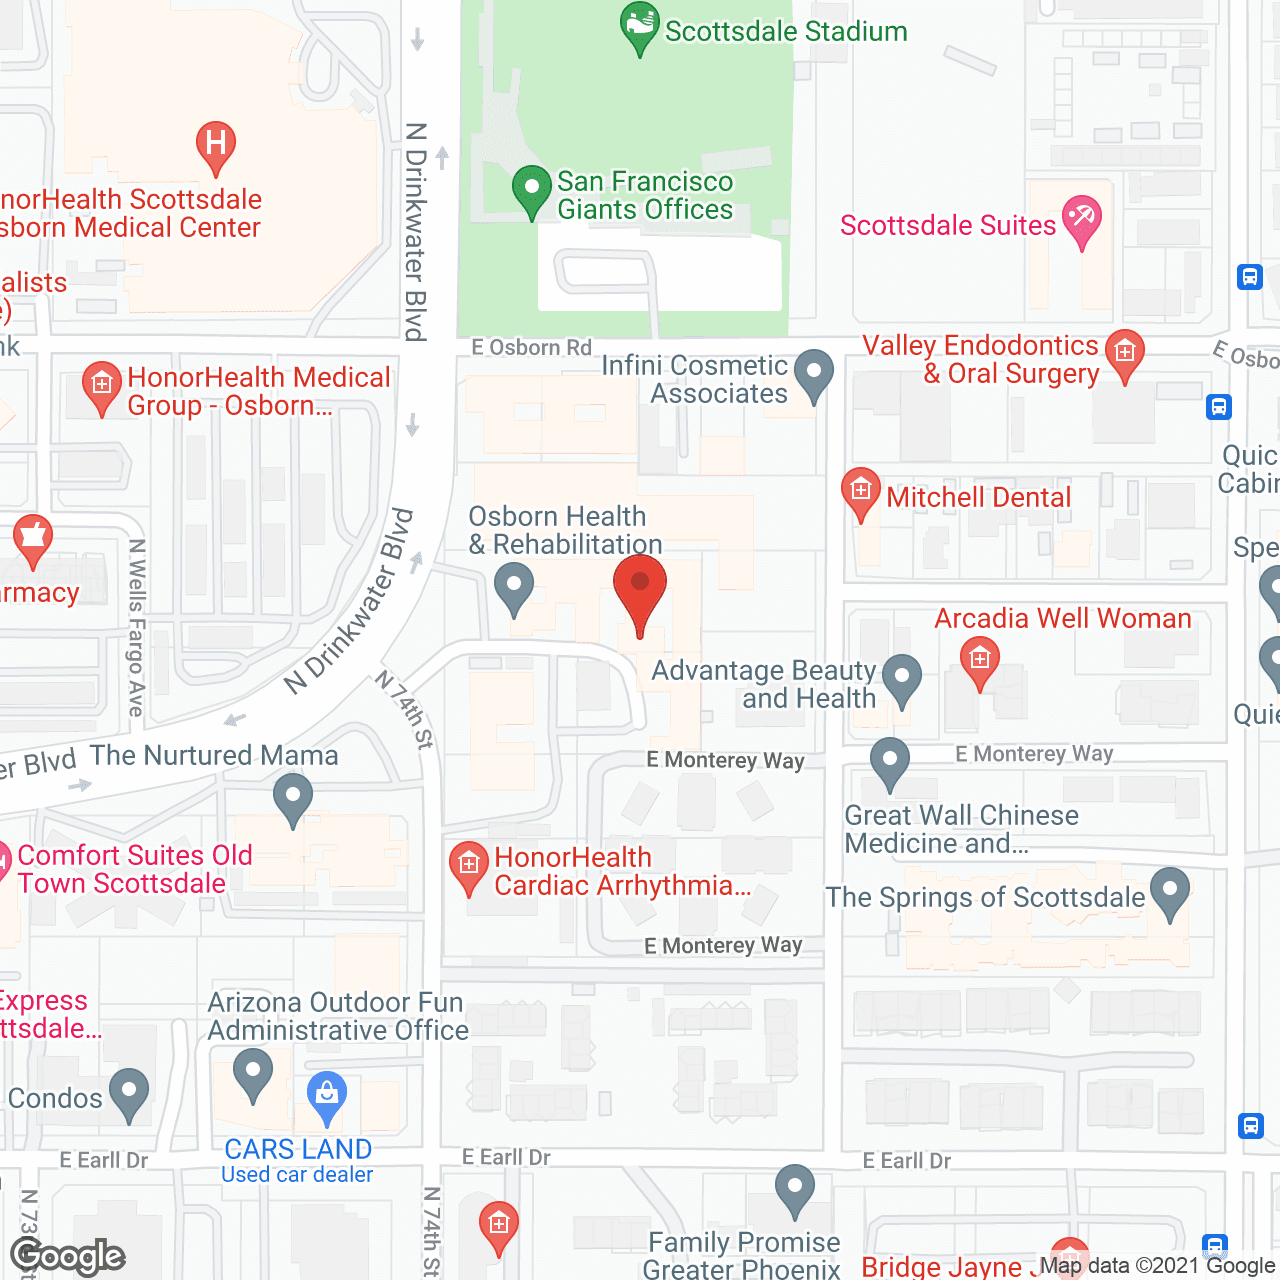 Infinia of Scottsdale in google map